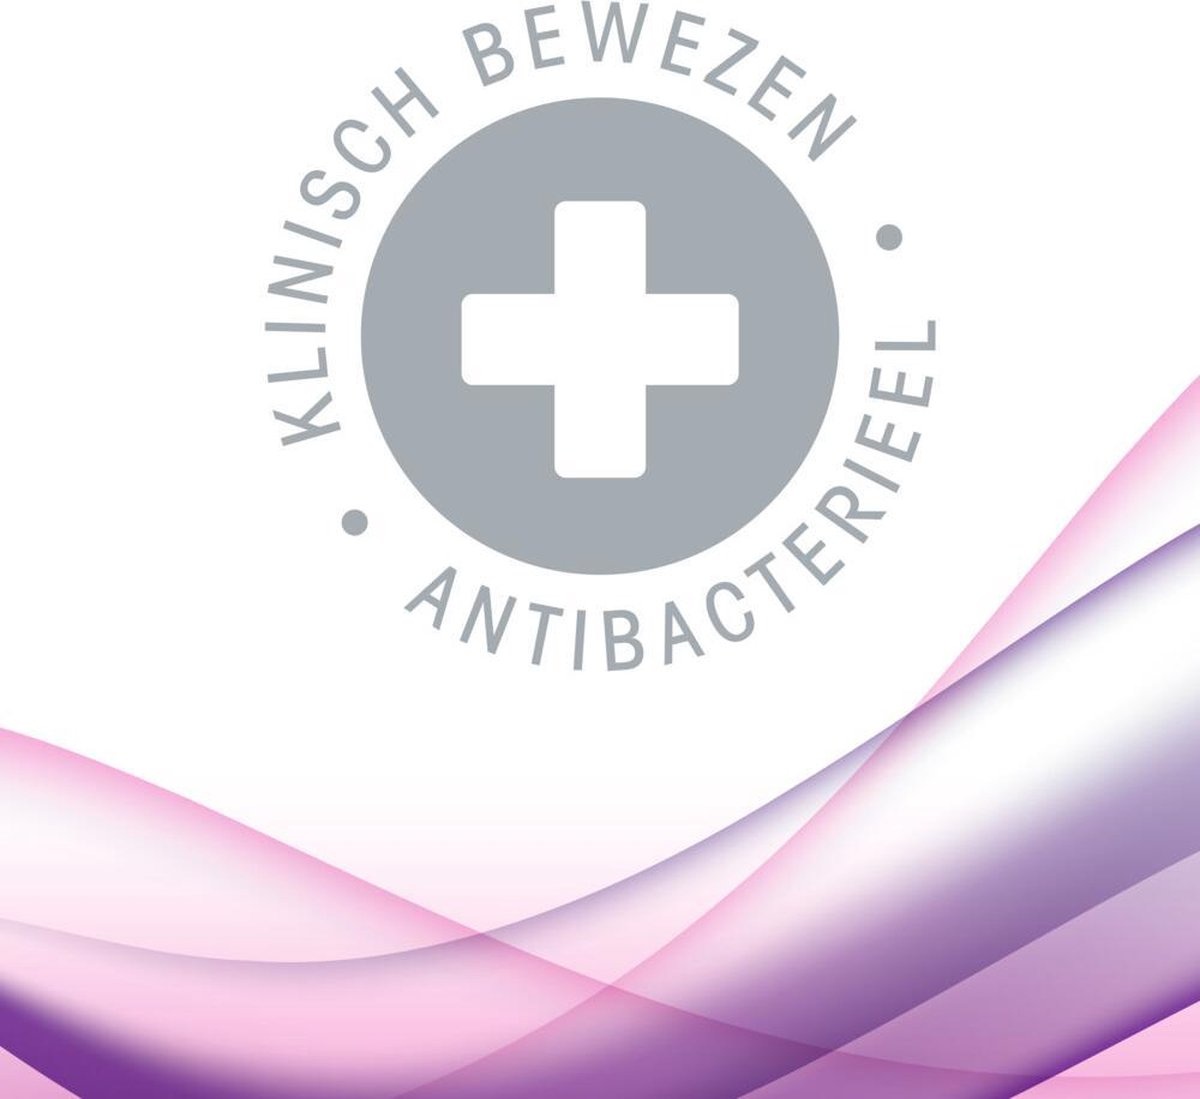 Unicura Savon Liquide Mains Anti Bacterial Balance - 250ml